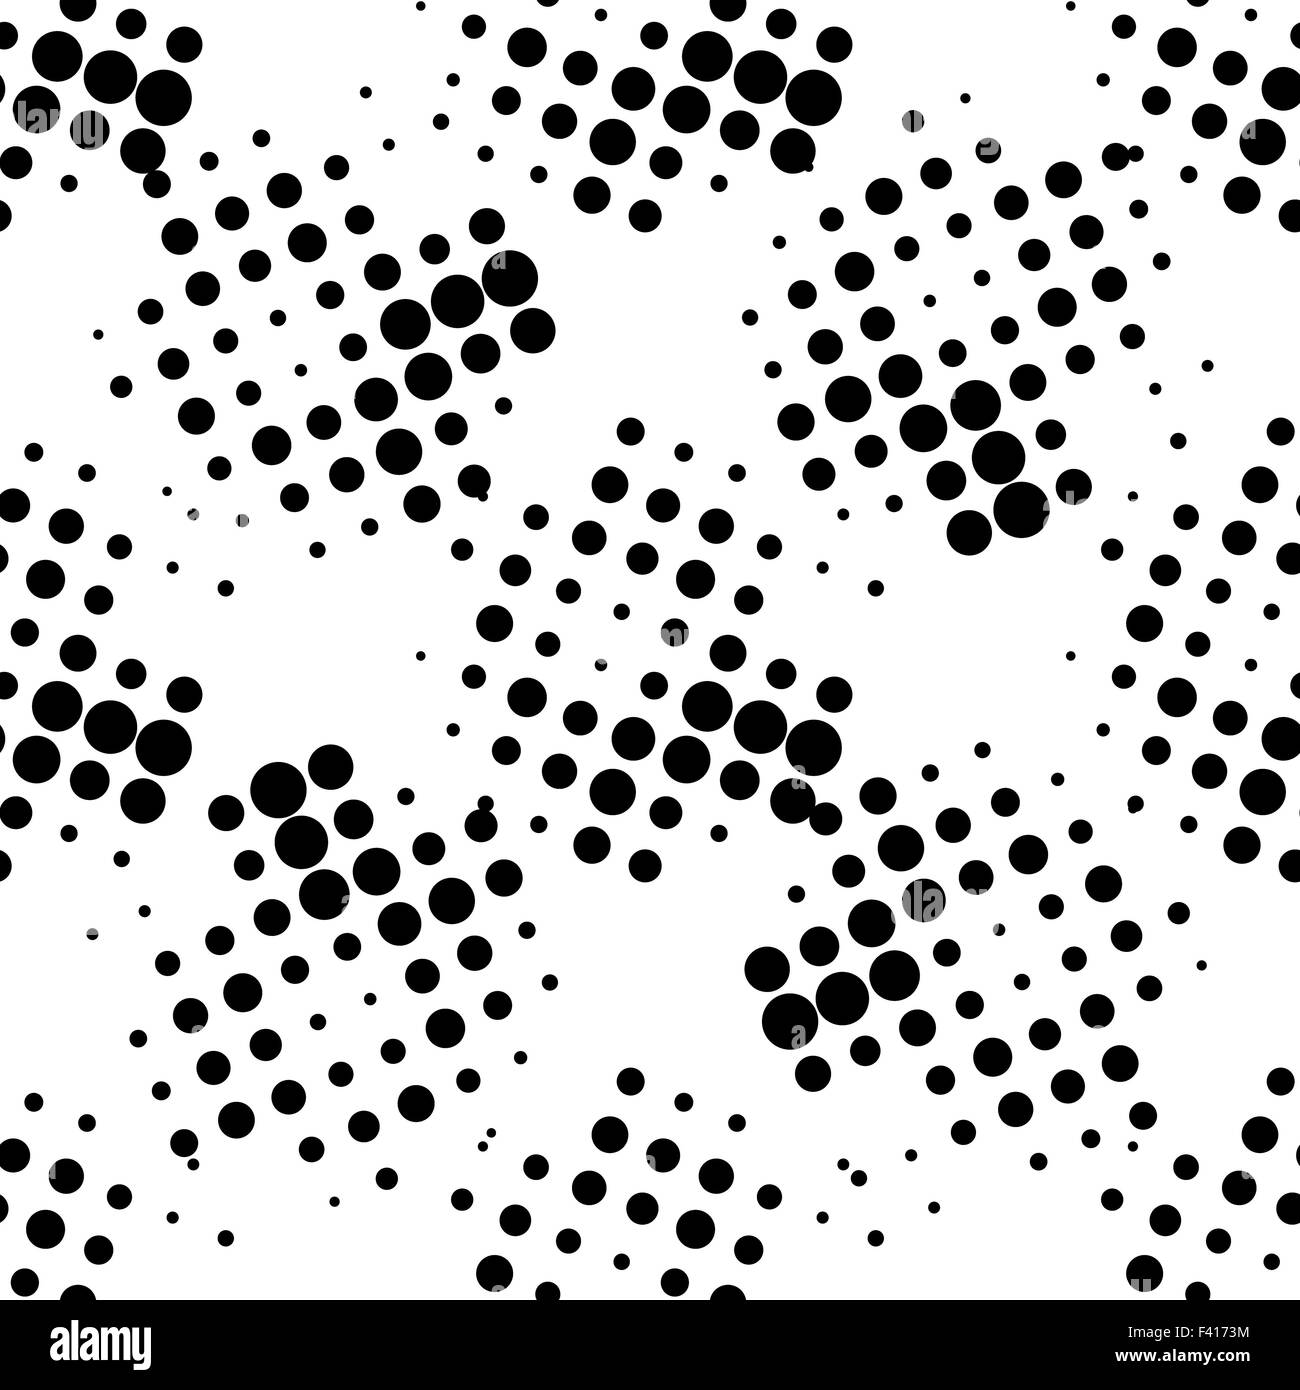 Seamless white and black pattern. Stock Photo